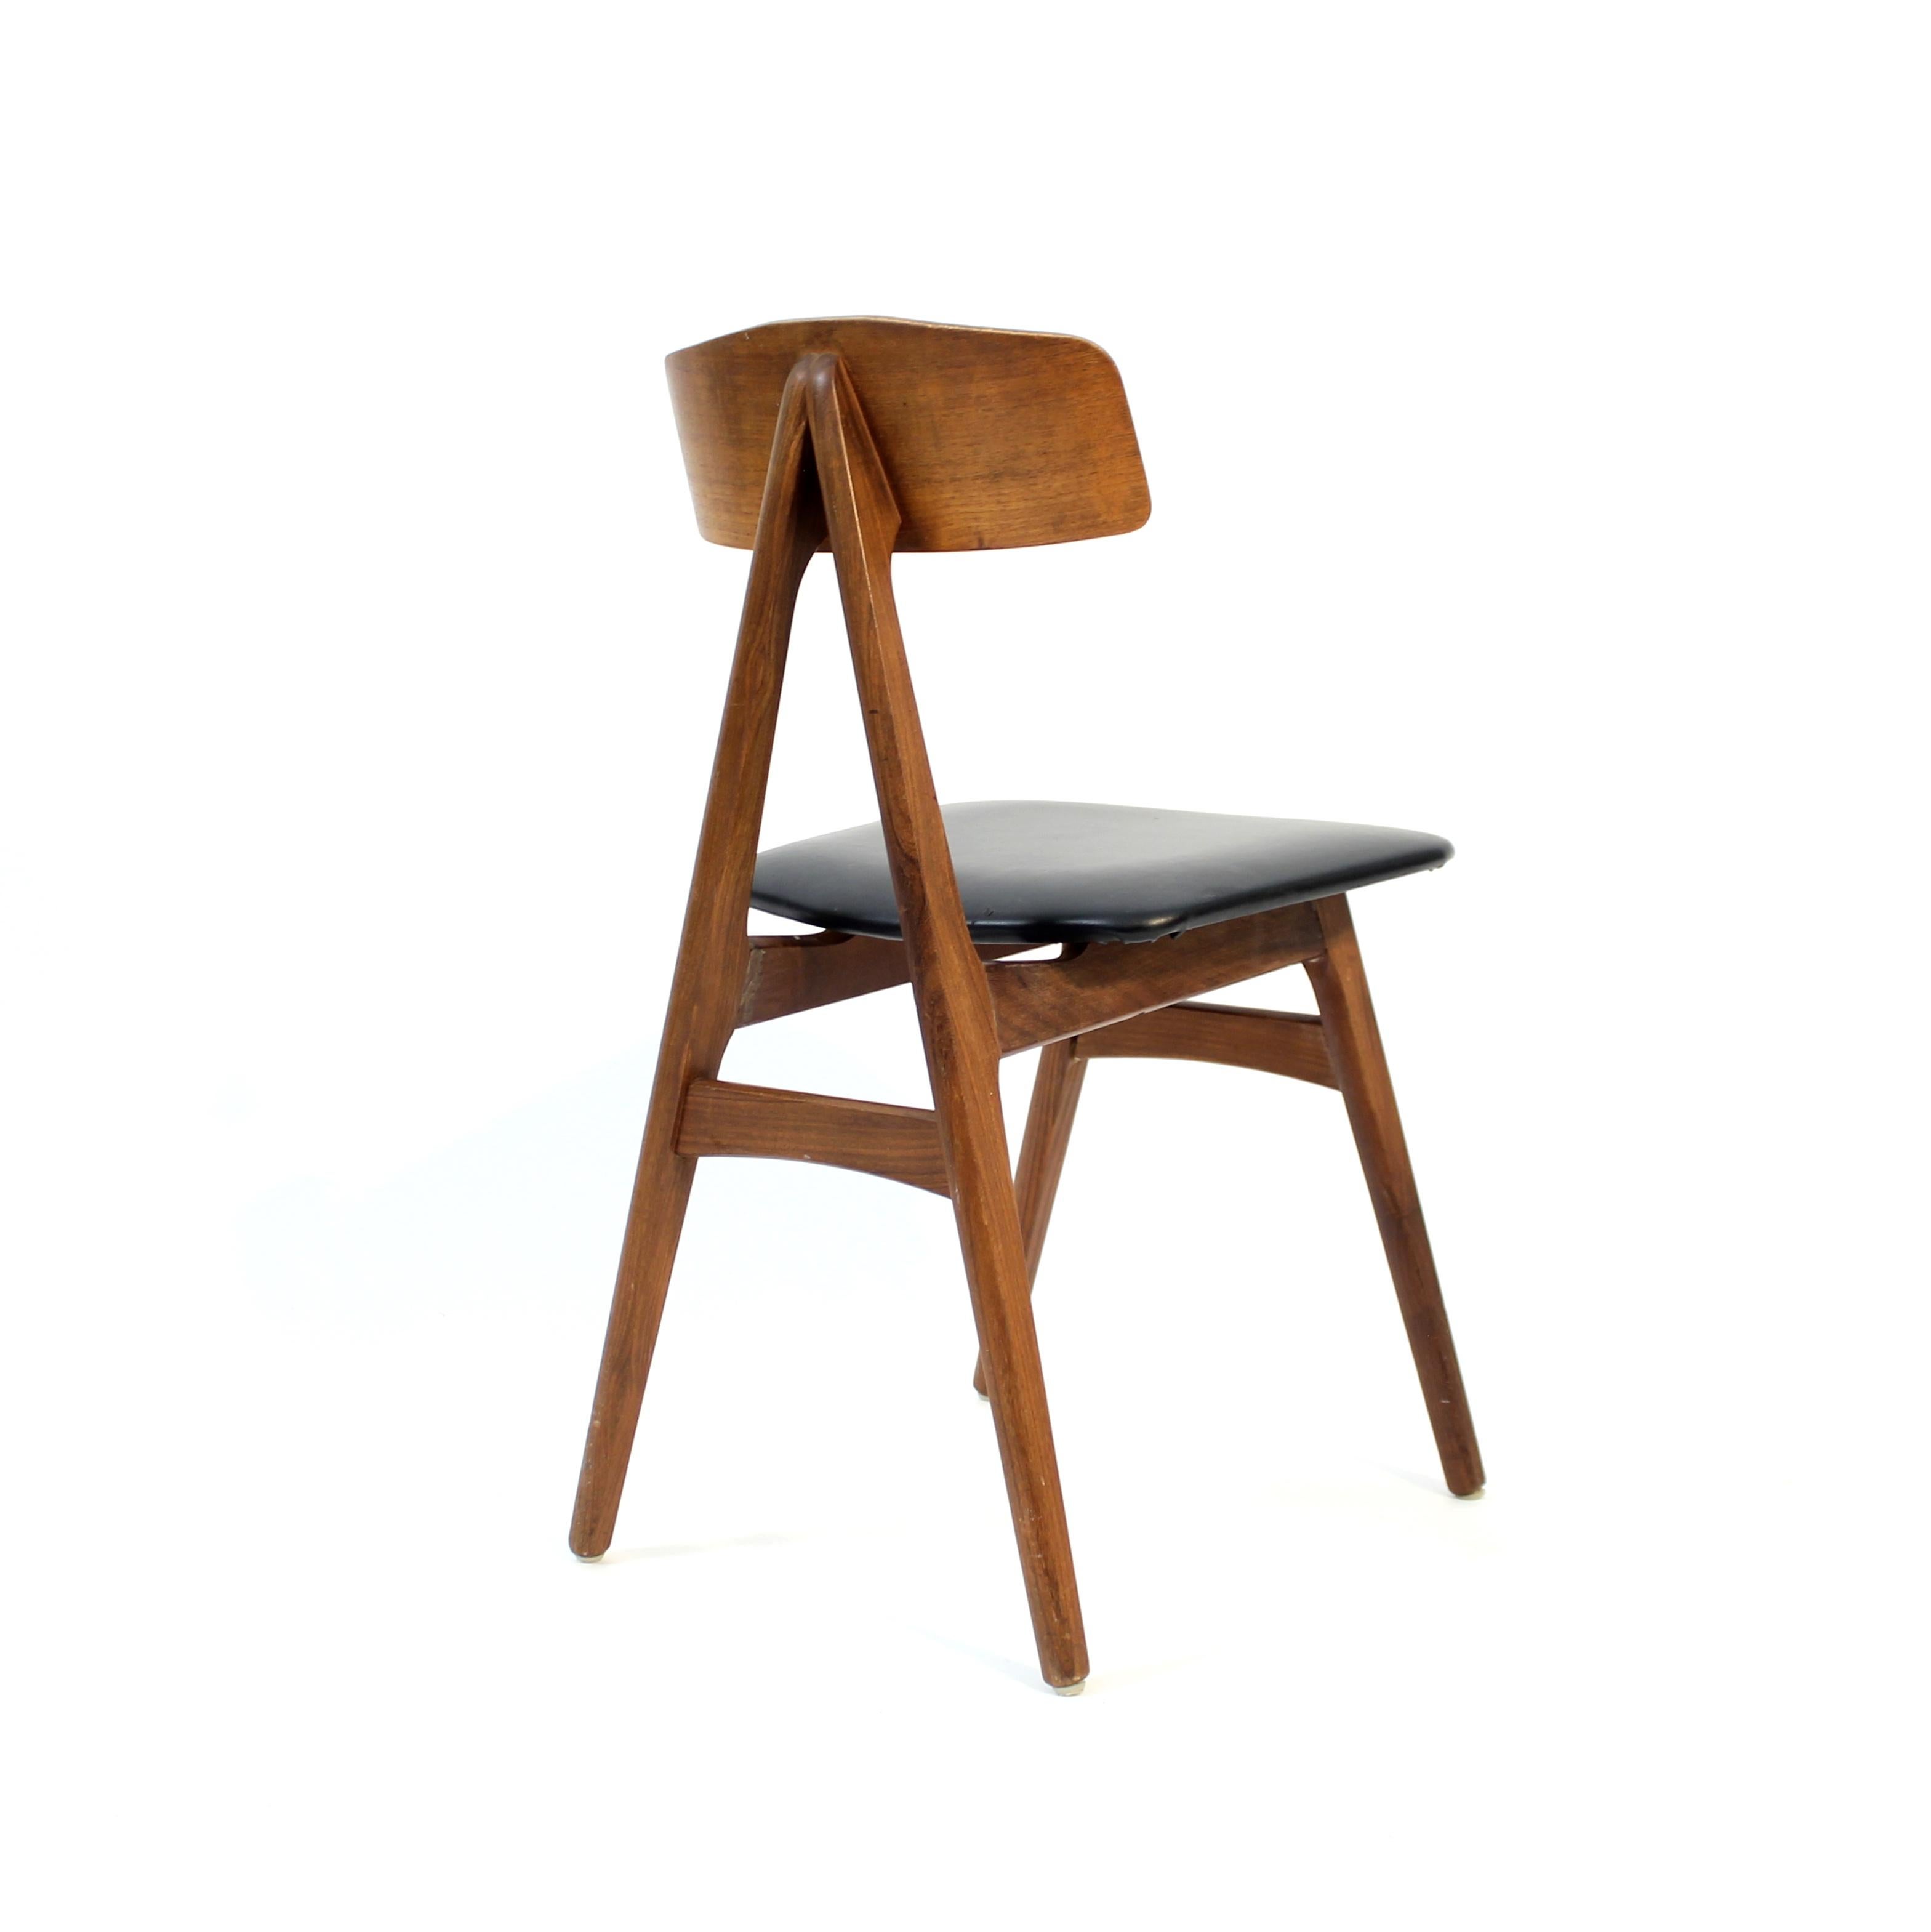 20th Century Bengt Ruda, Nizza teak chair for IKEA, 1959 For Sale